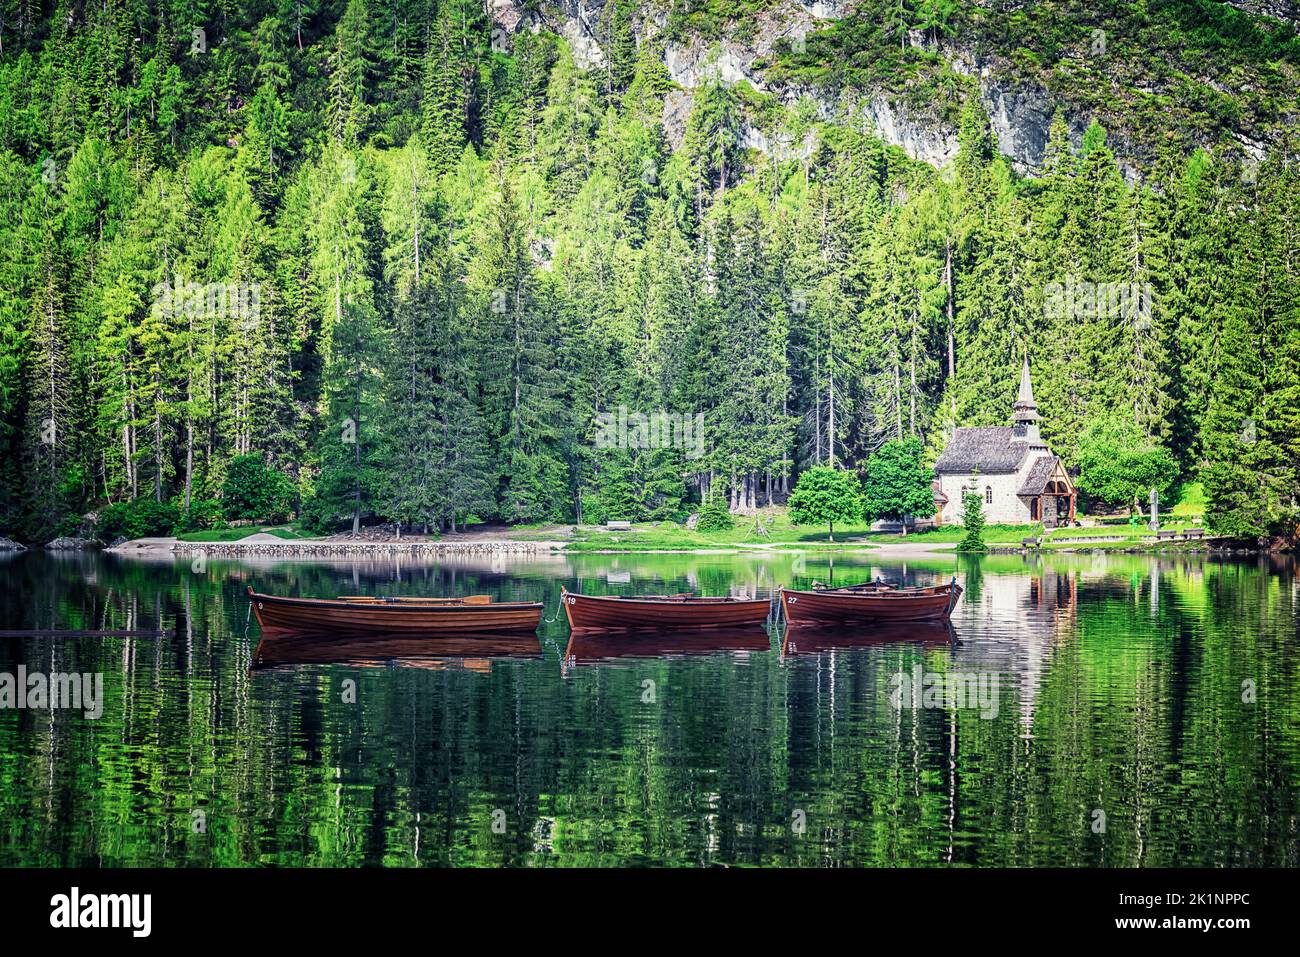 Lago di Braies - Pragser Wildsee, South Tyrol, Italy Stock Photo